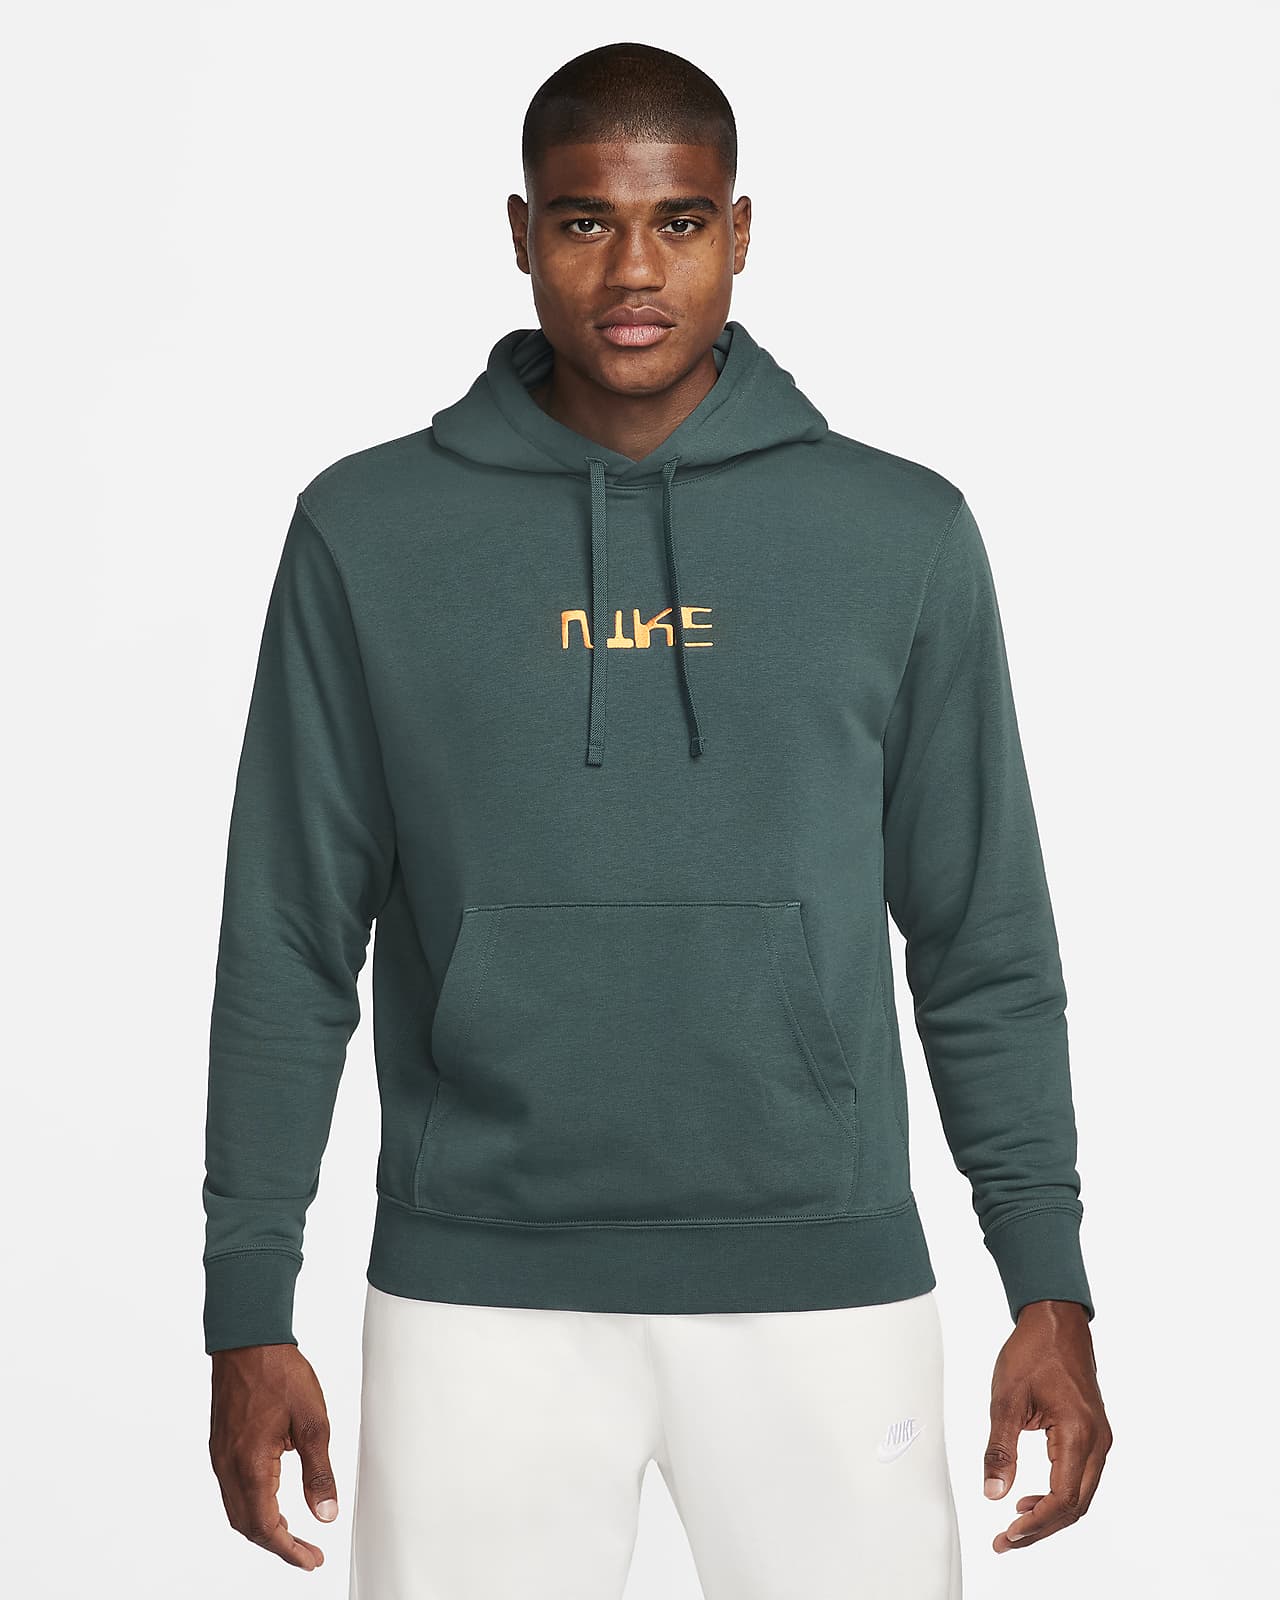 Nike Men's Club Fleece Pullover Soccer Hoodie, Medium, Deep Jungle